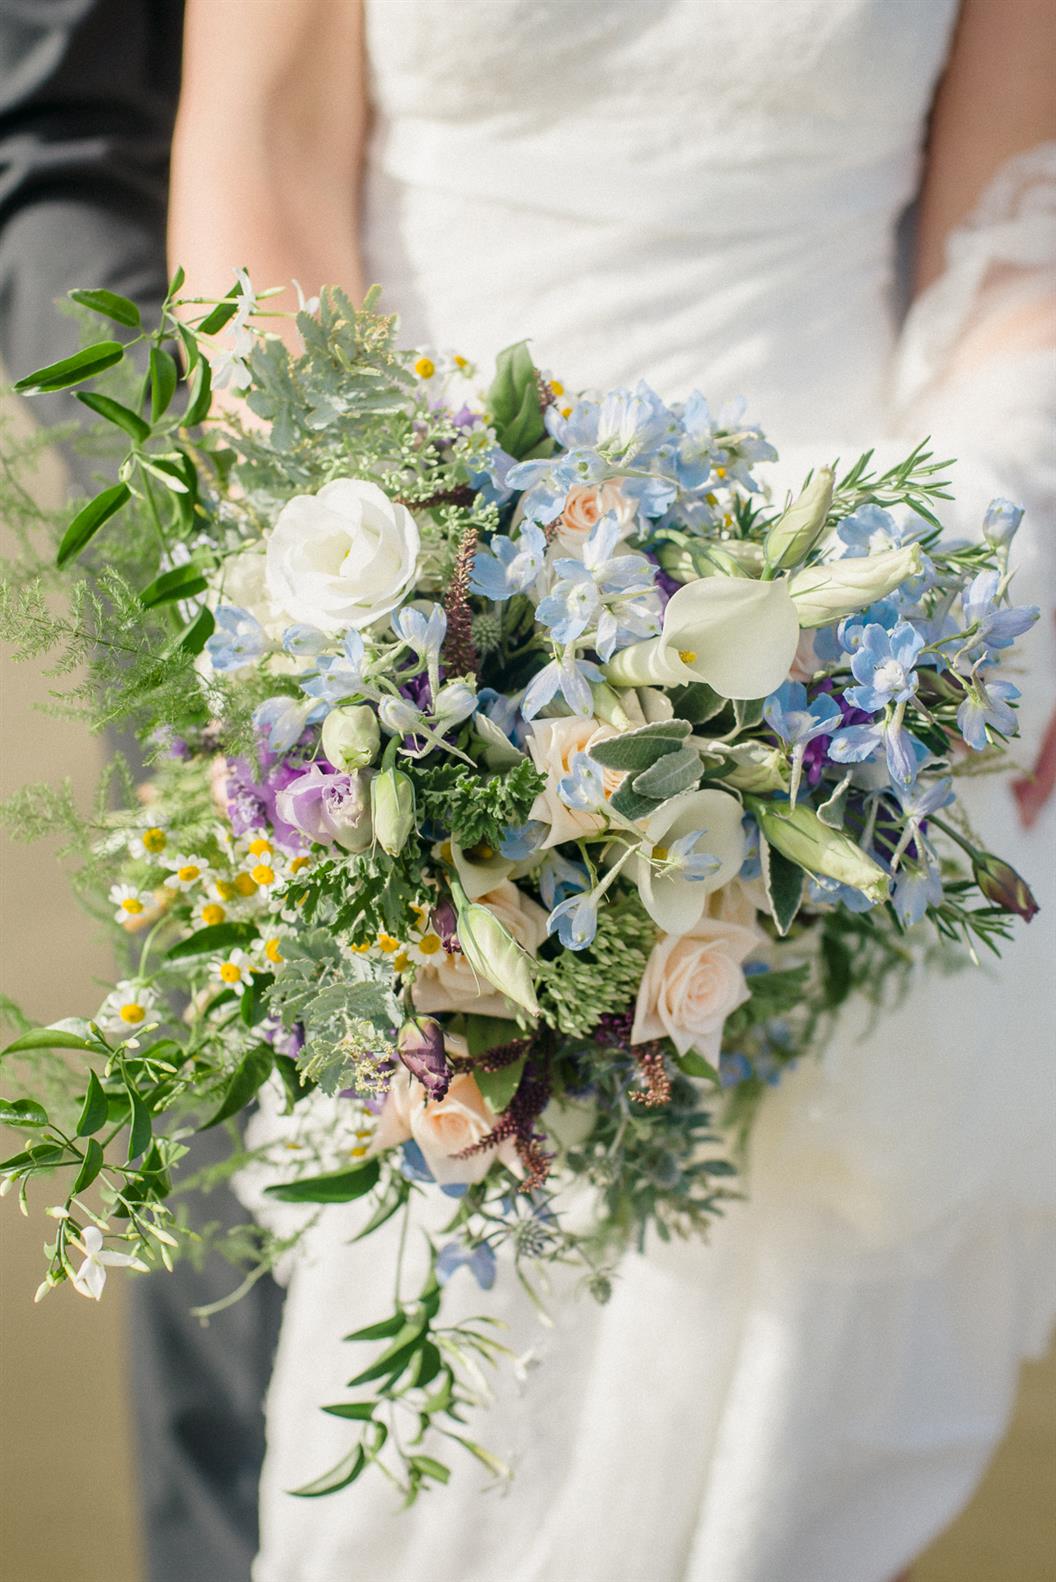 A Wild Blue Bridal Bouquet for a Beach Wedding Chic